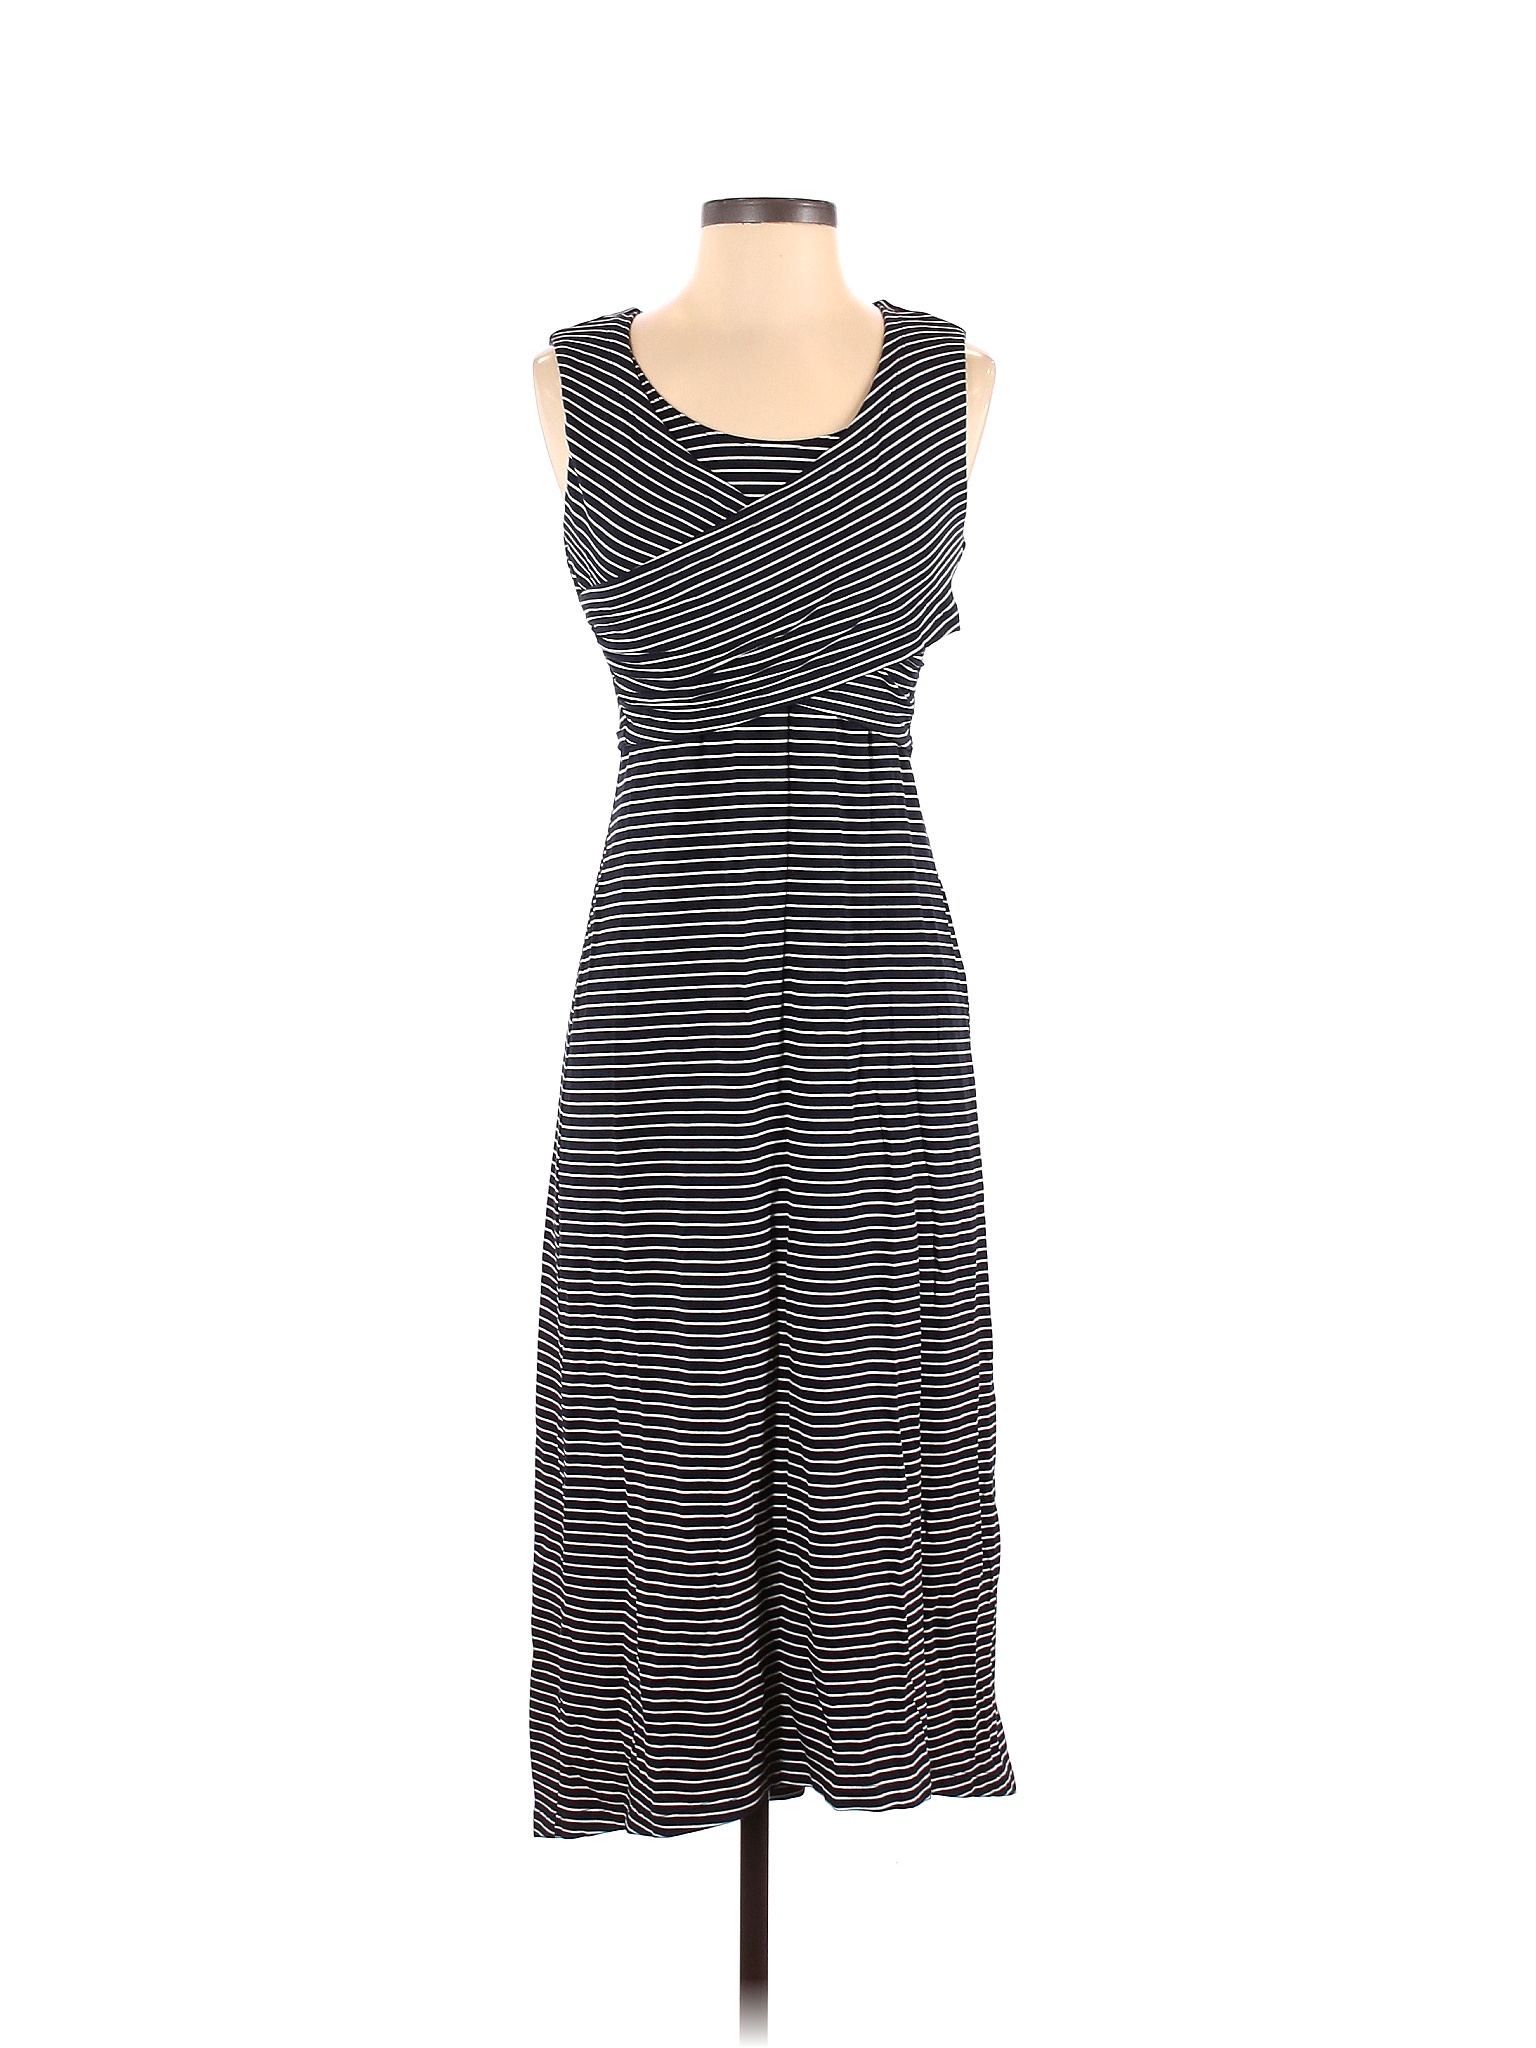 CAbi Stripes Multi Color Black Casual Dress Size XS - 85% off | thredUP